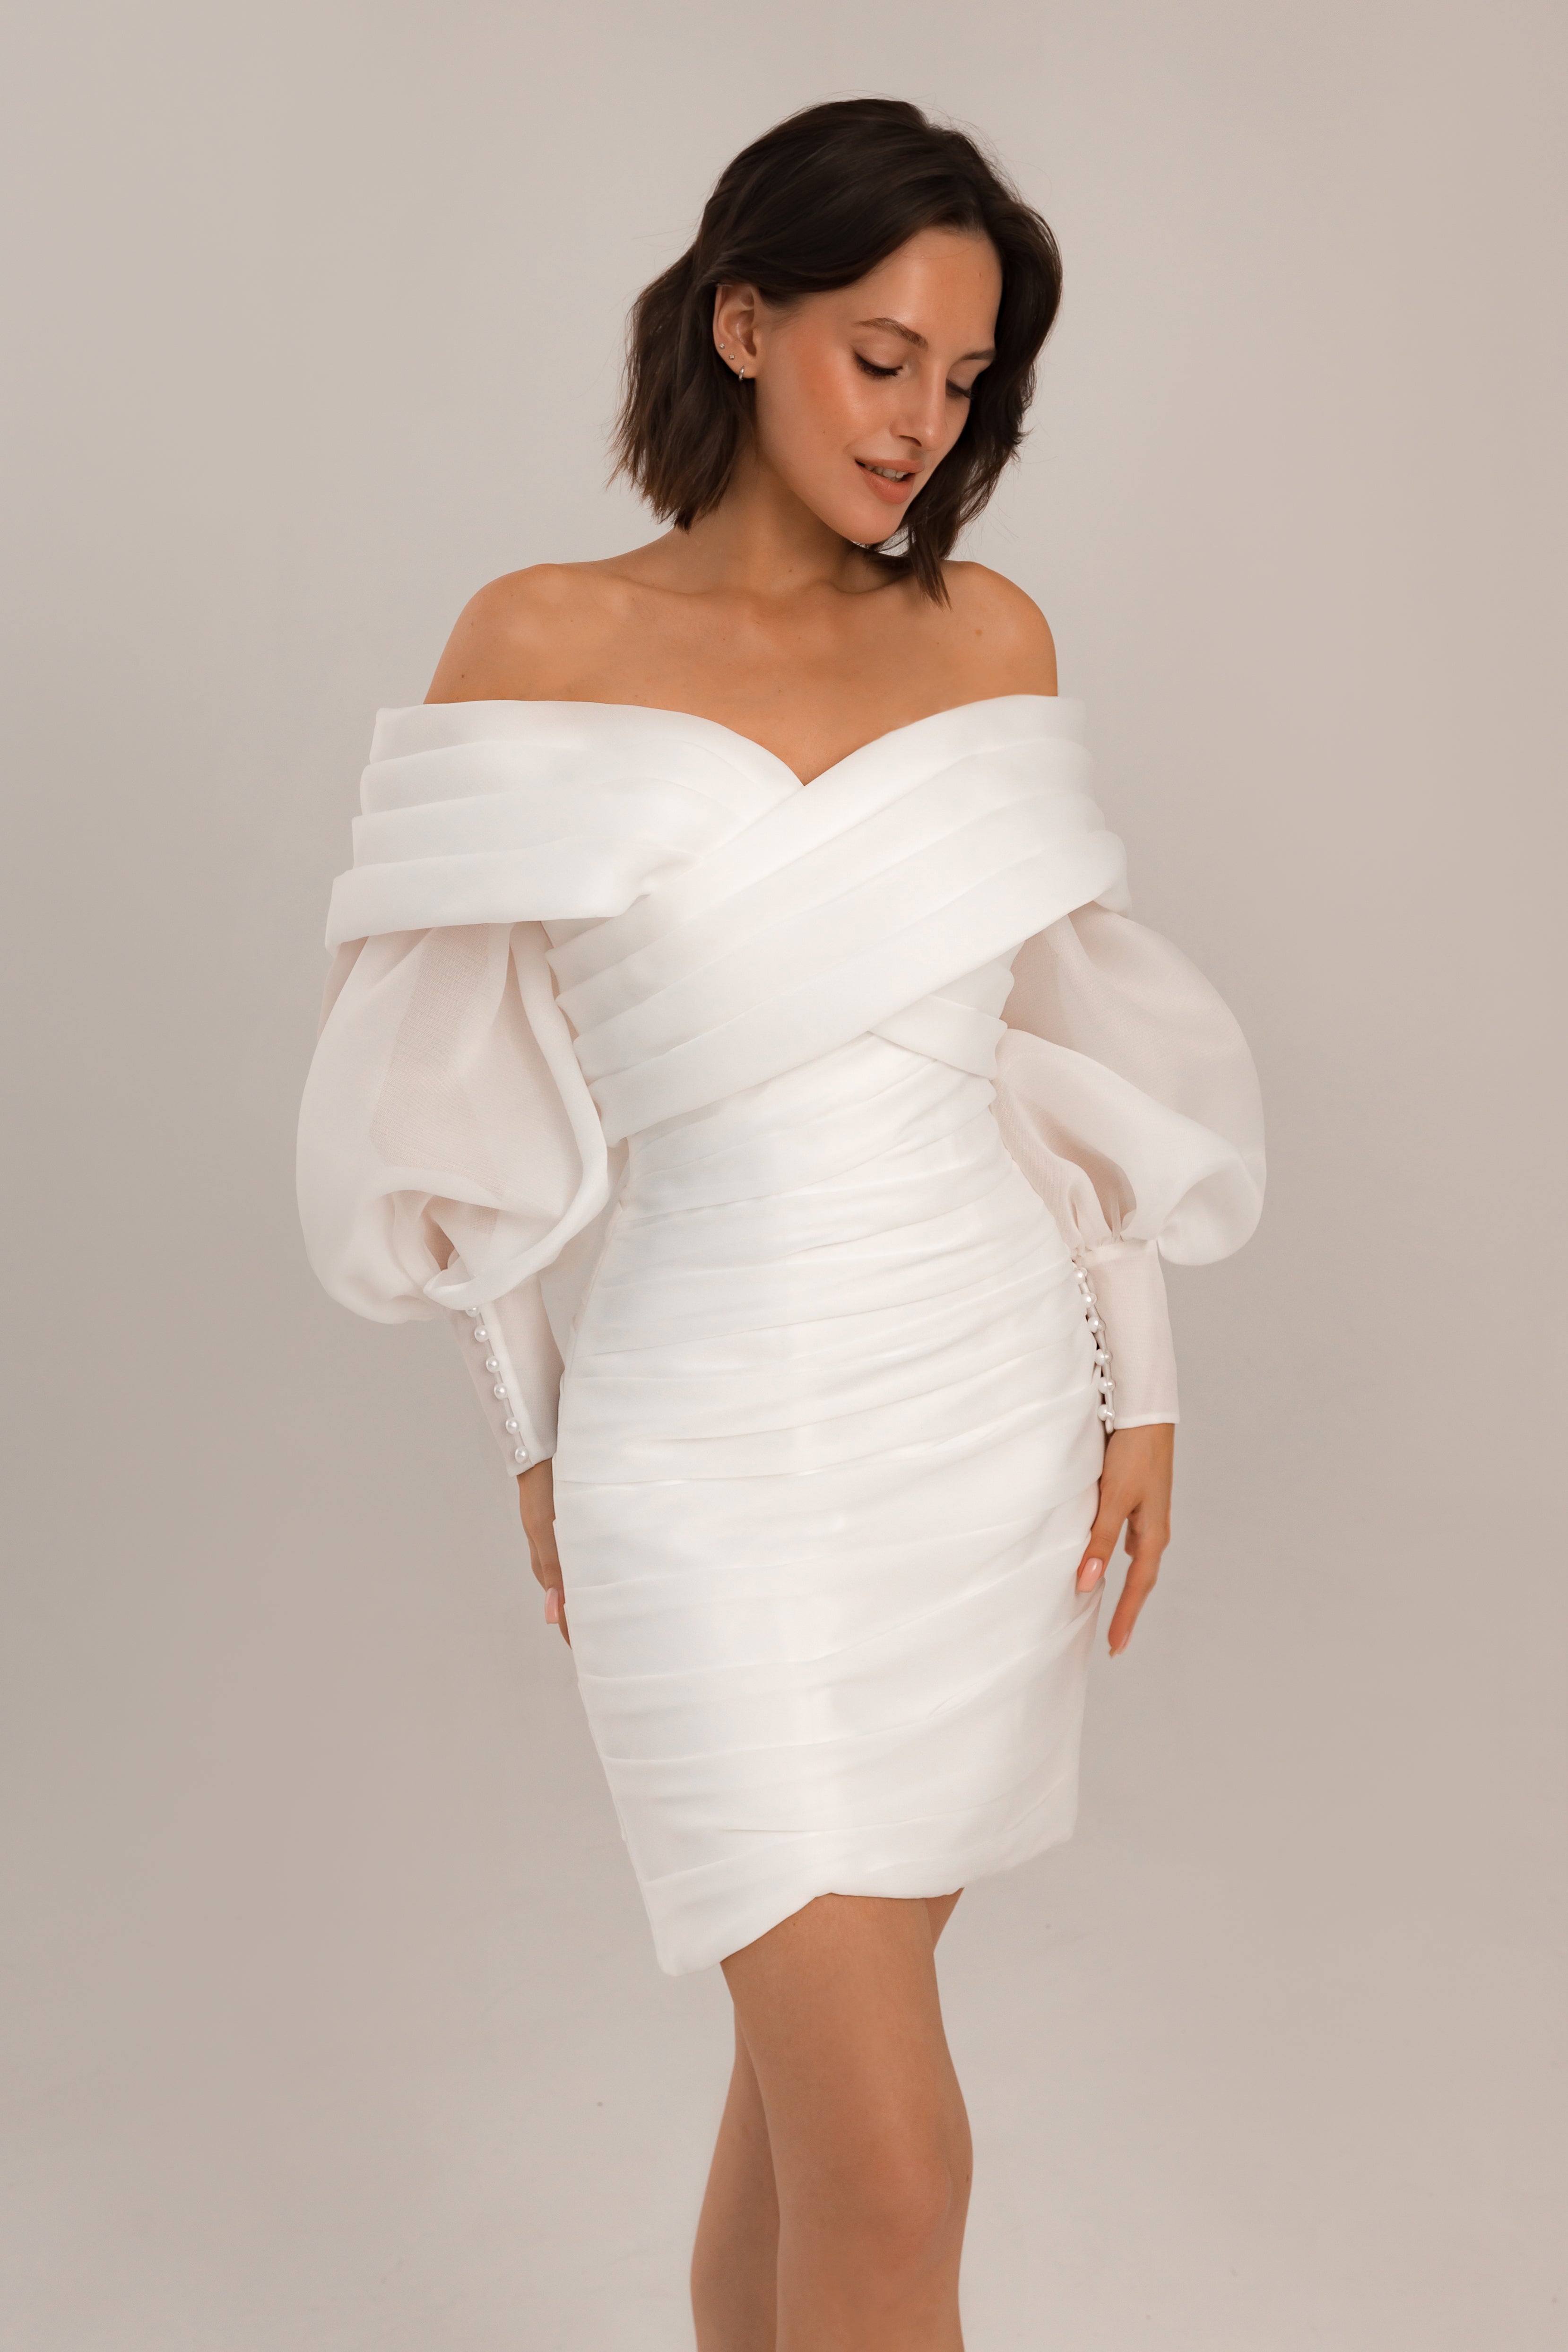 Organza Wedding Dress Audrey Mini – Olivia Bottega